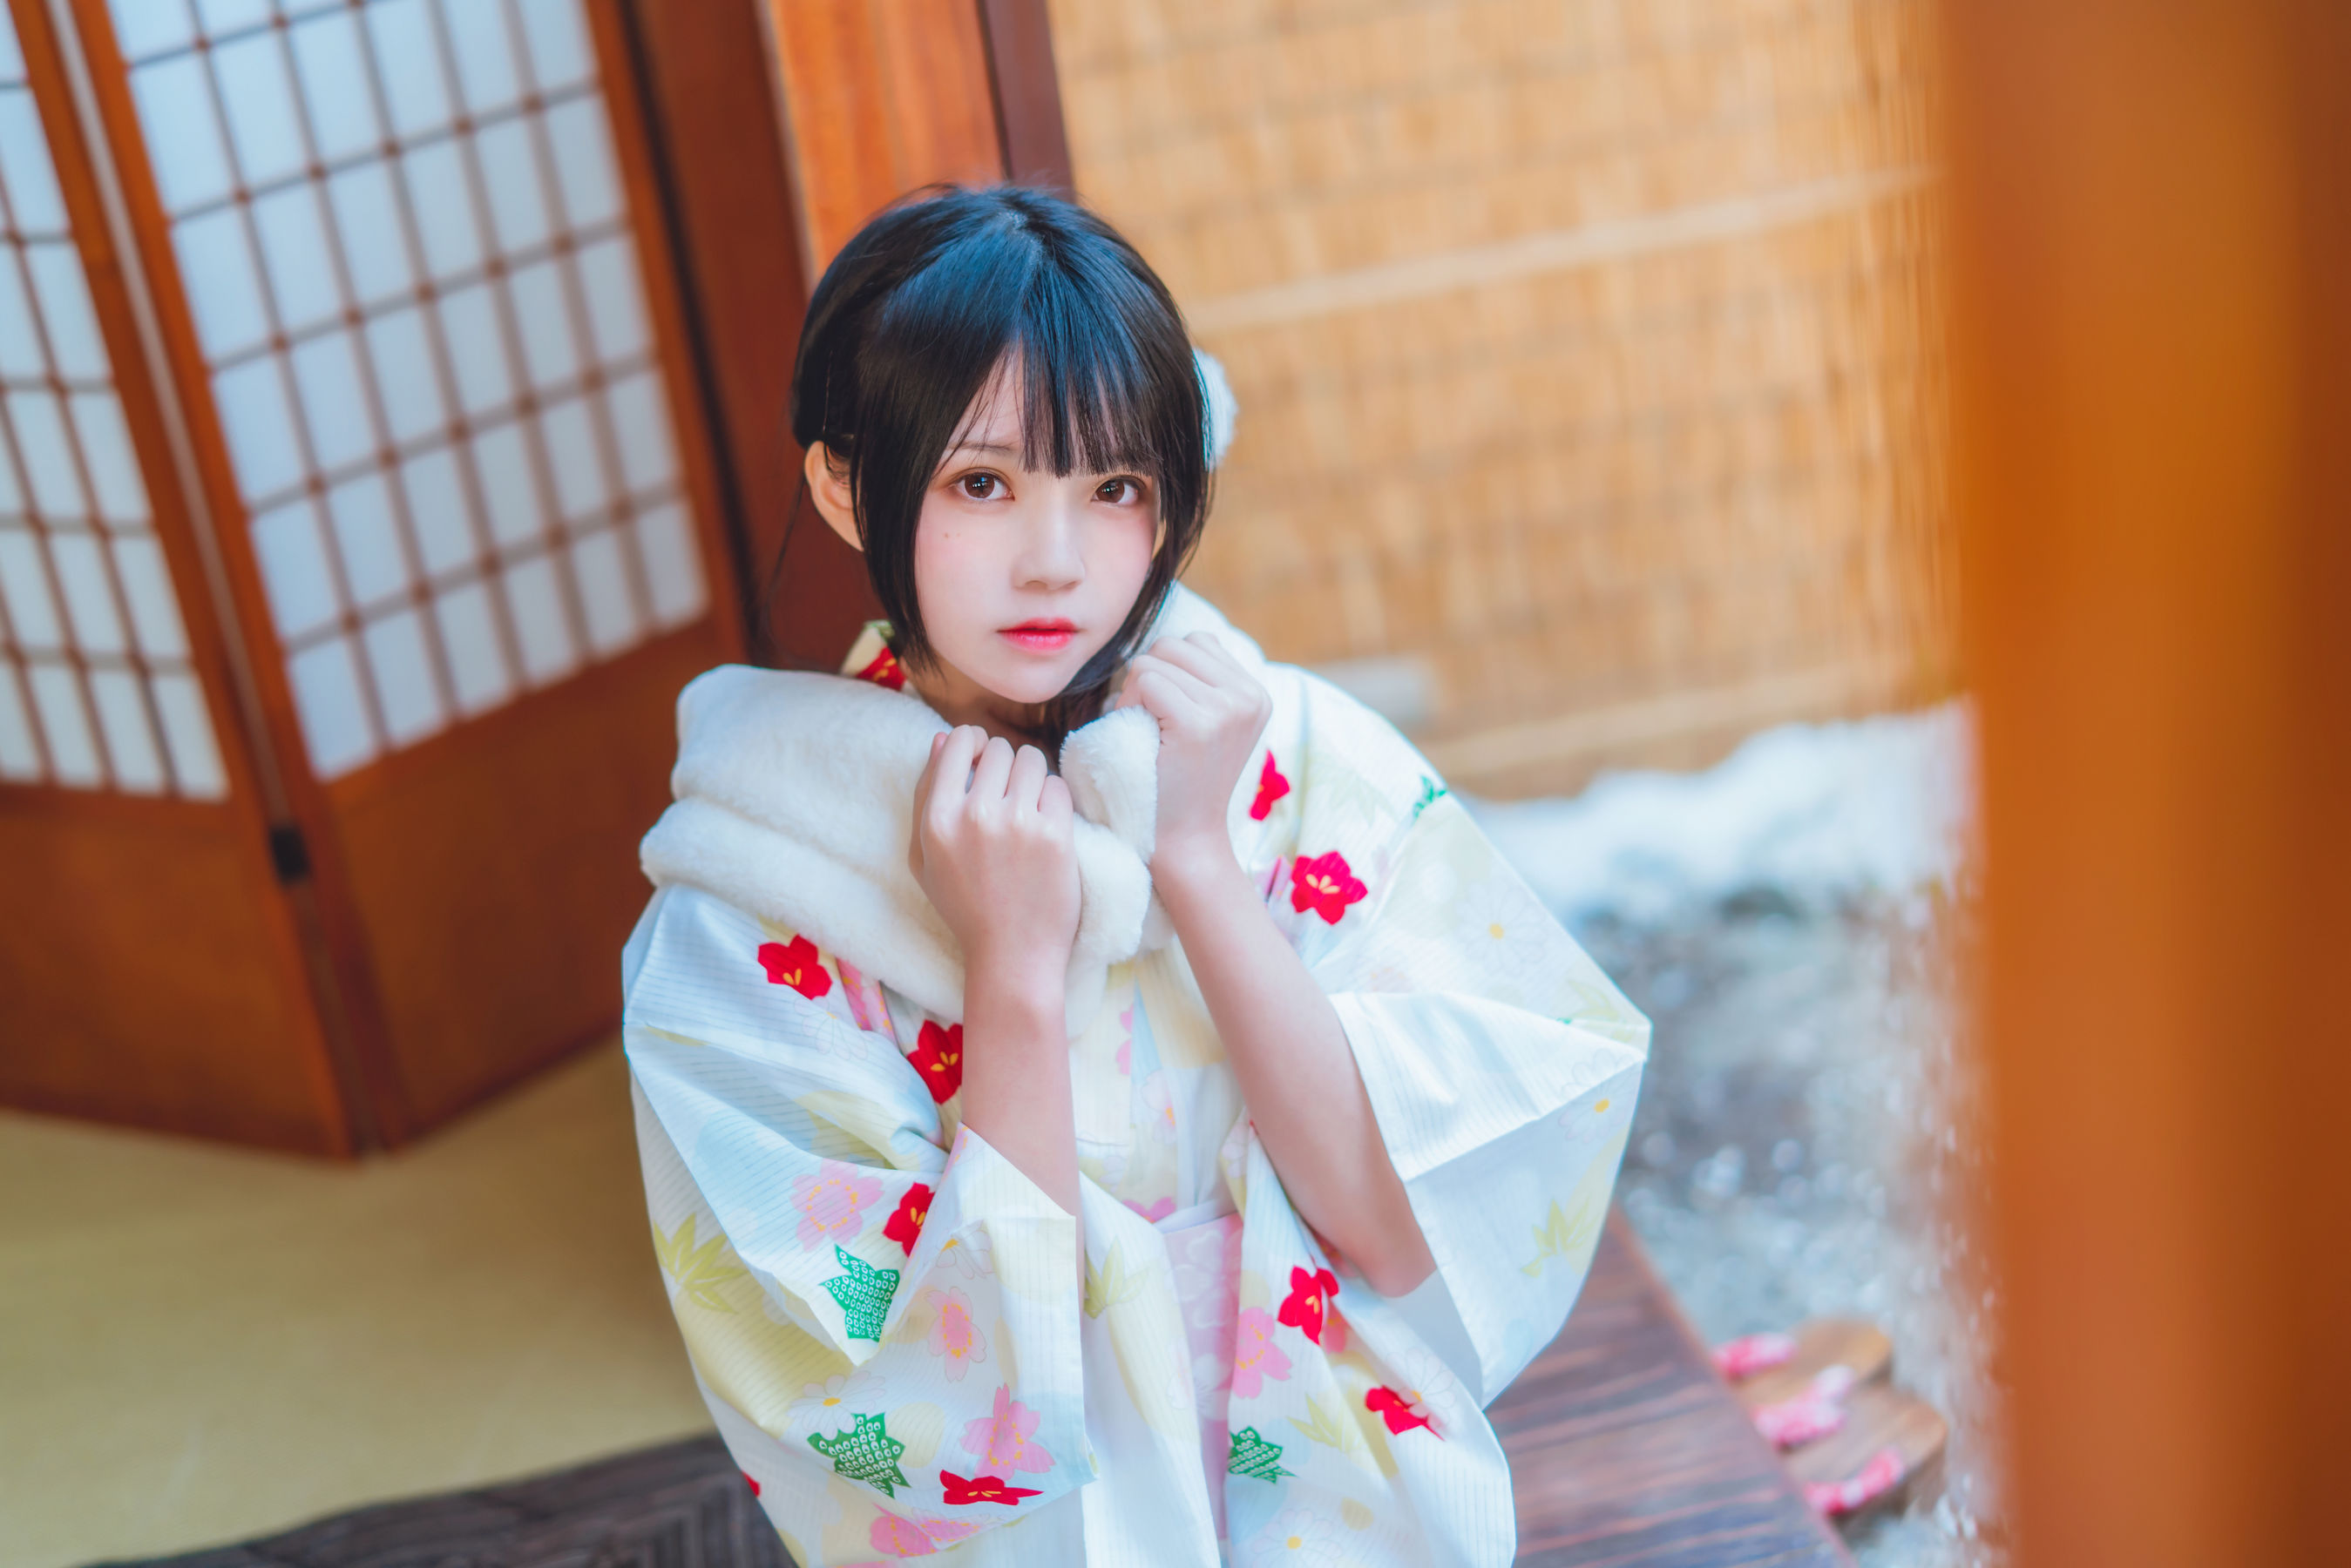 [糖] Vol.234 “kimono girl” photo set